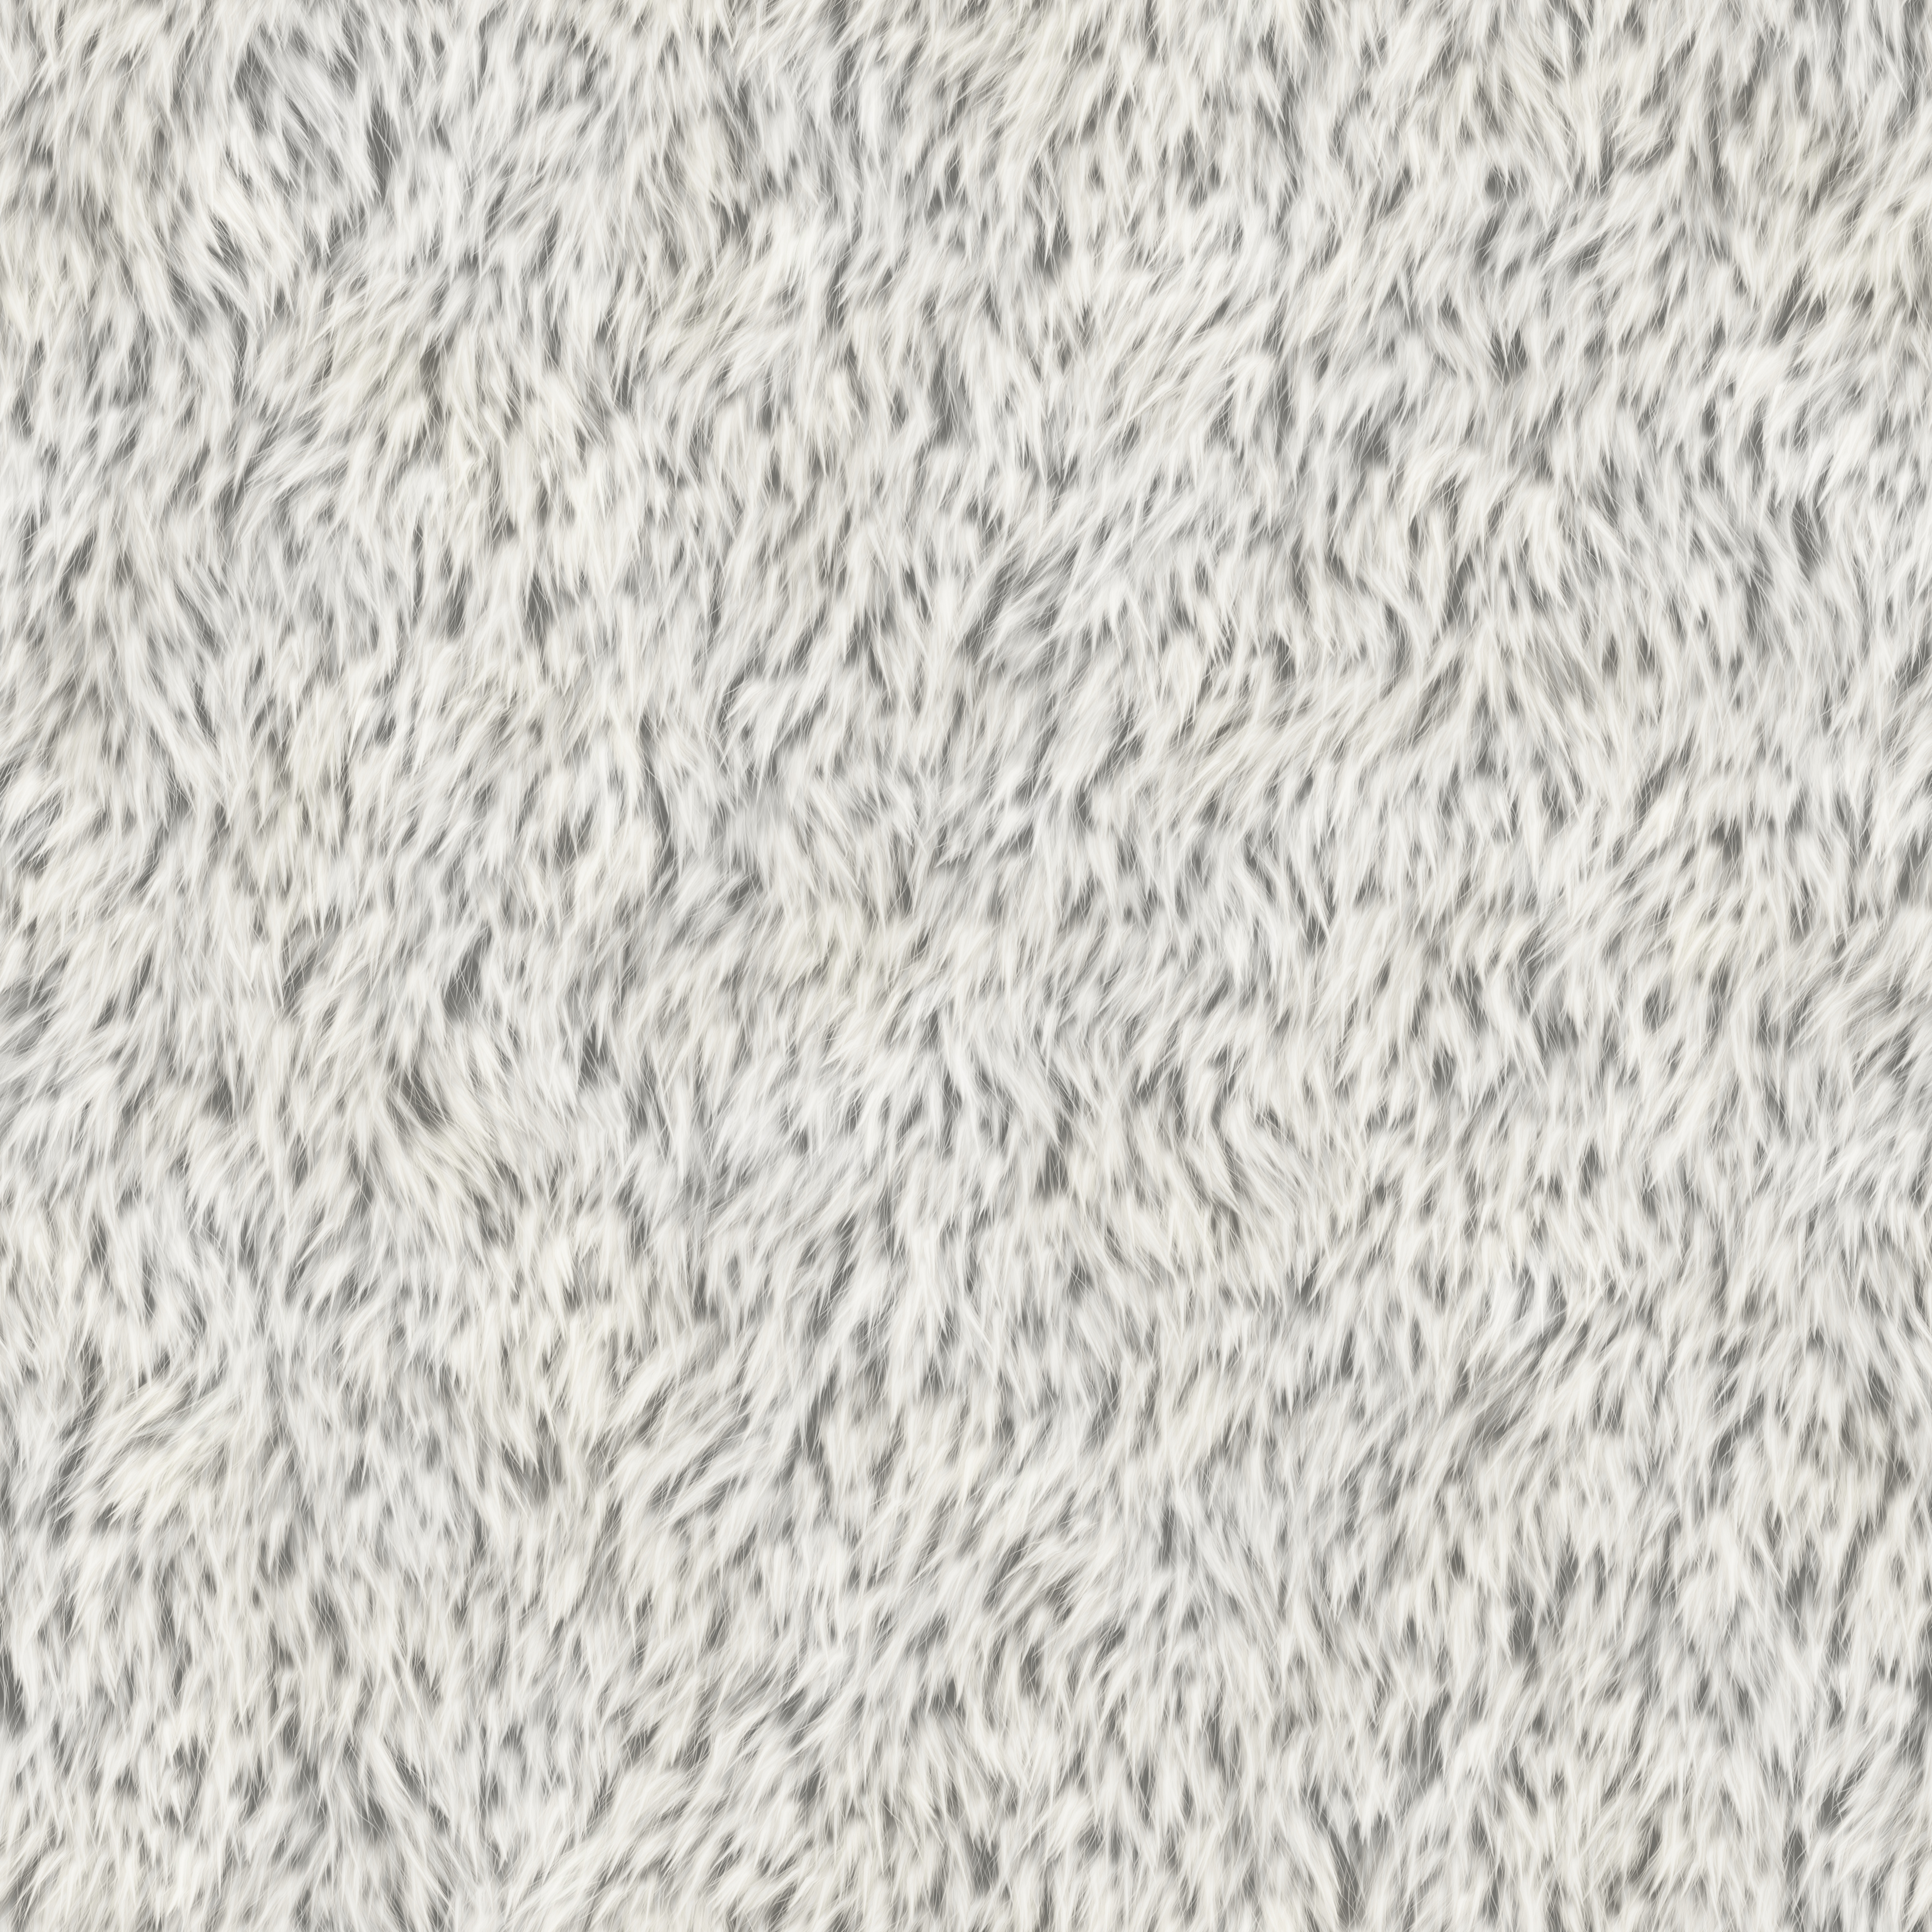 Short White Fur Texture Background Mytextures